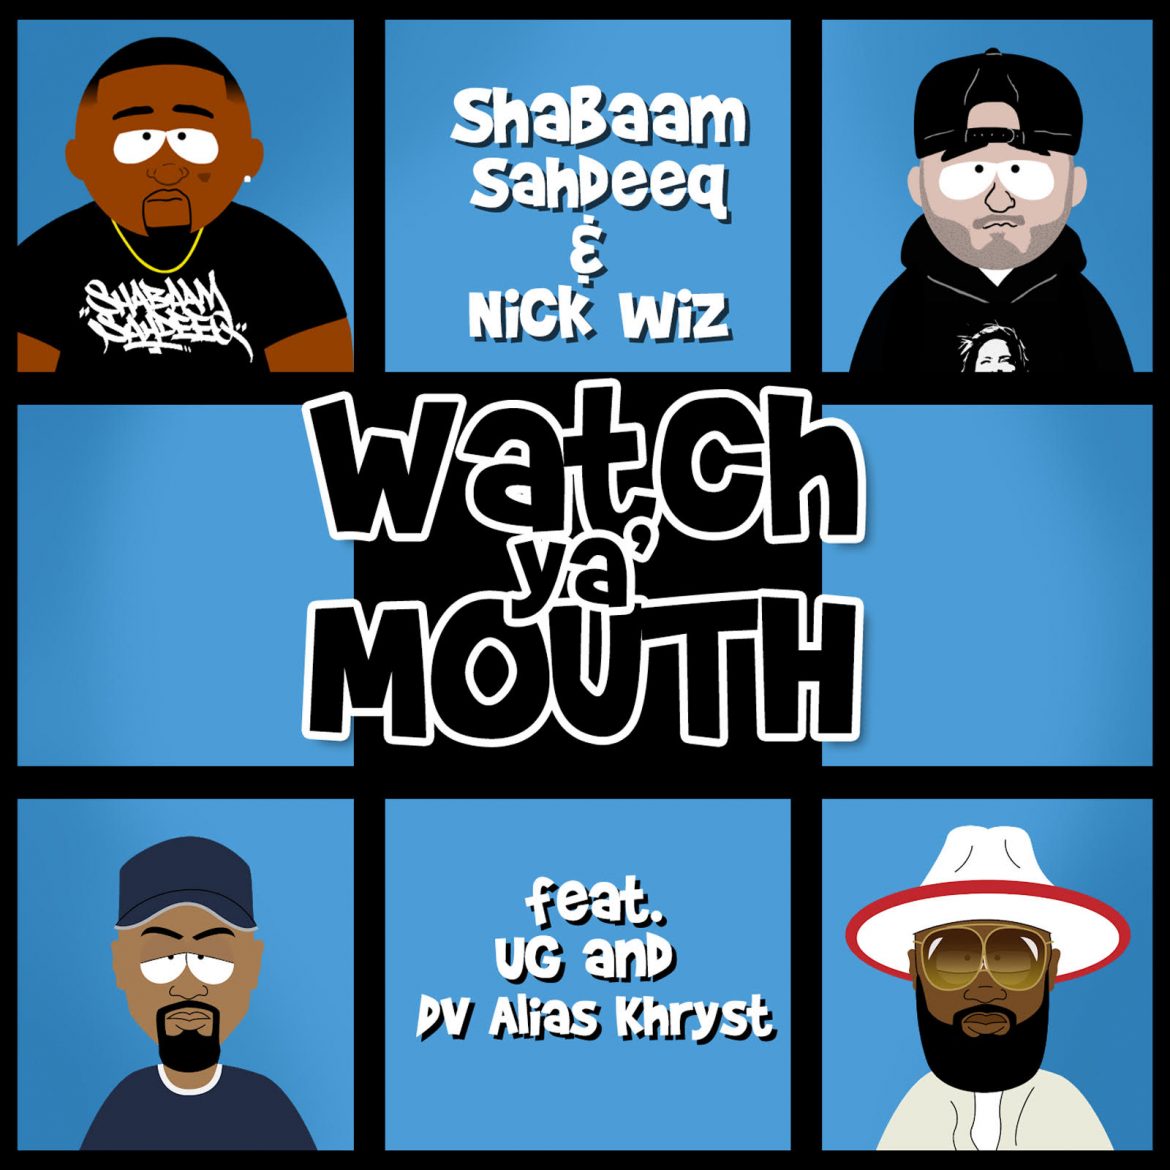 Shabaam Sahdeeq and Nick Wiz drop "Watch Ya' Mouth"